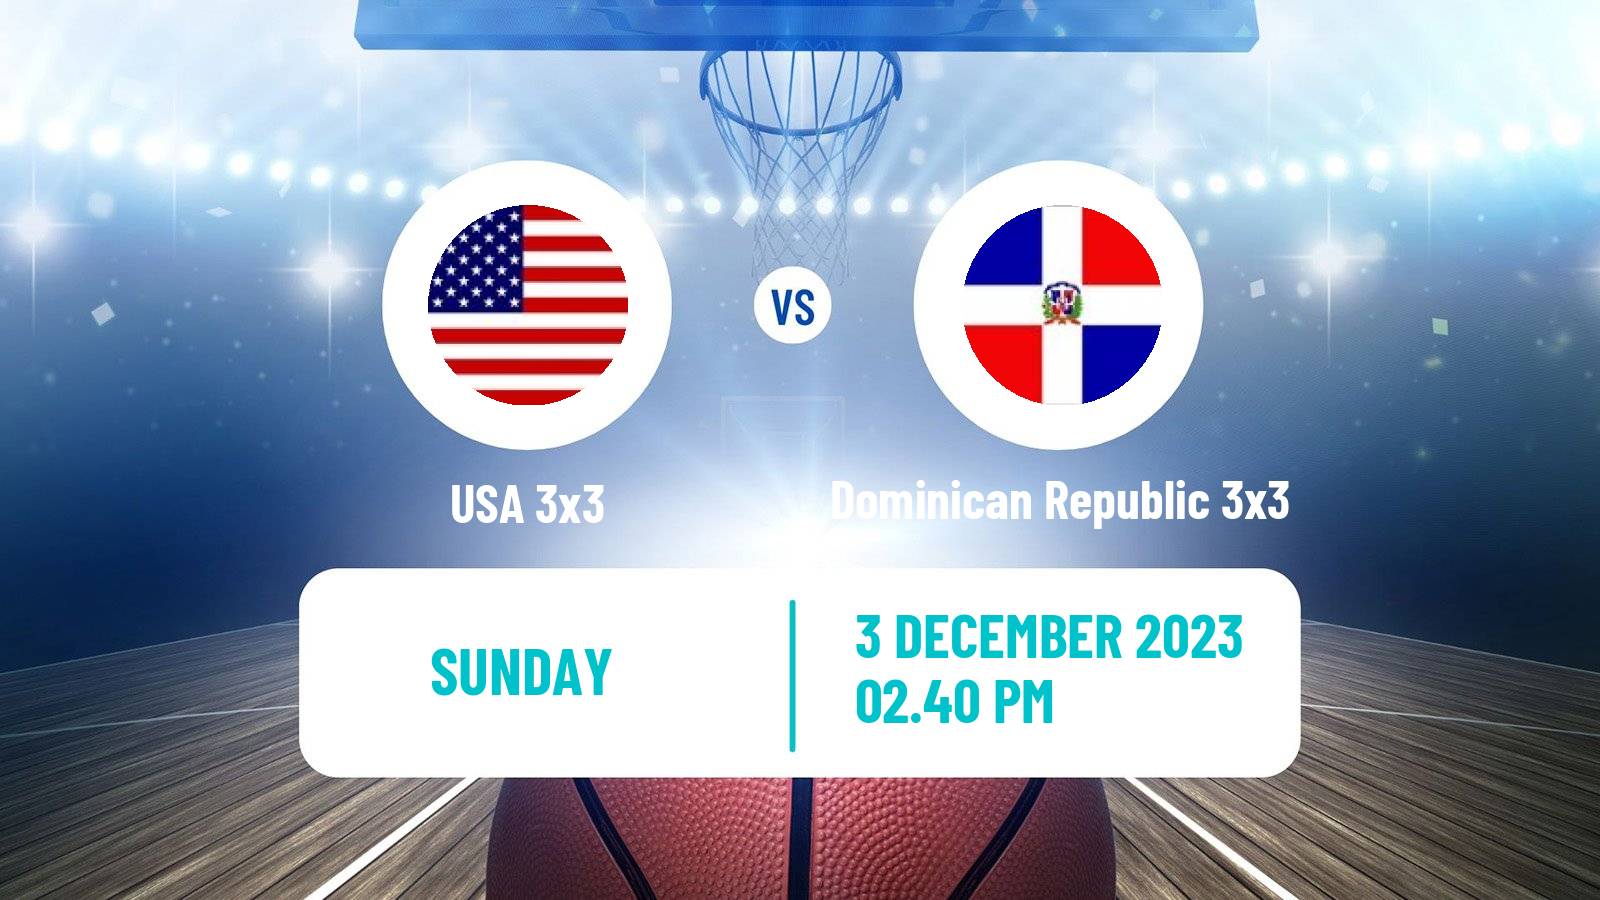 Basketball Americup 3x3 USA 3x3 - Dominican Republic 3x3